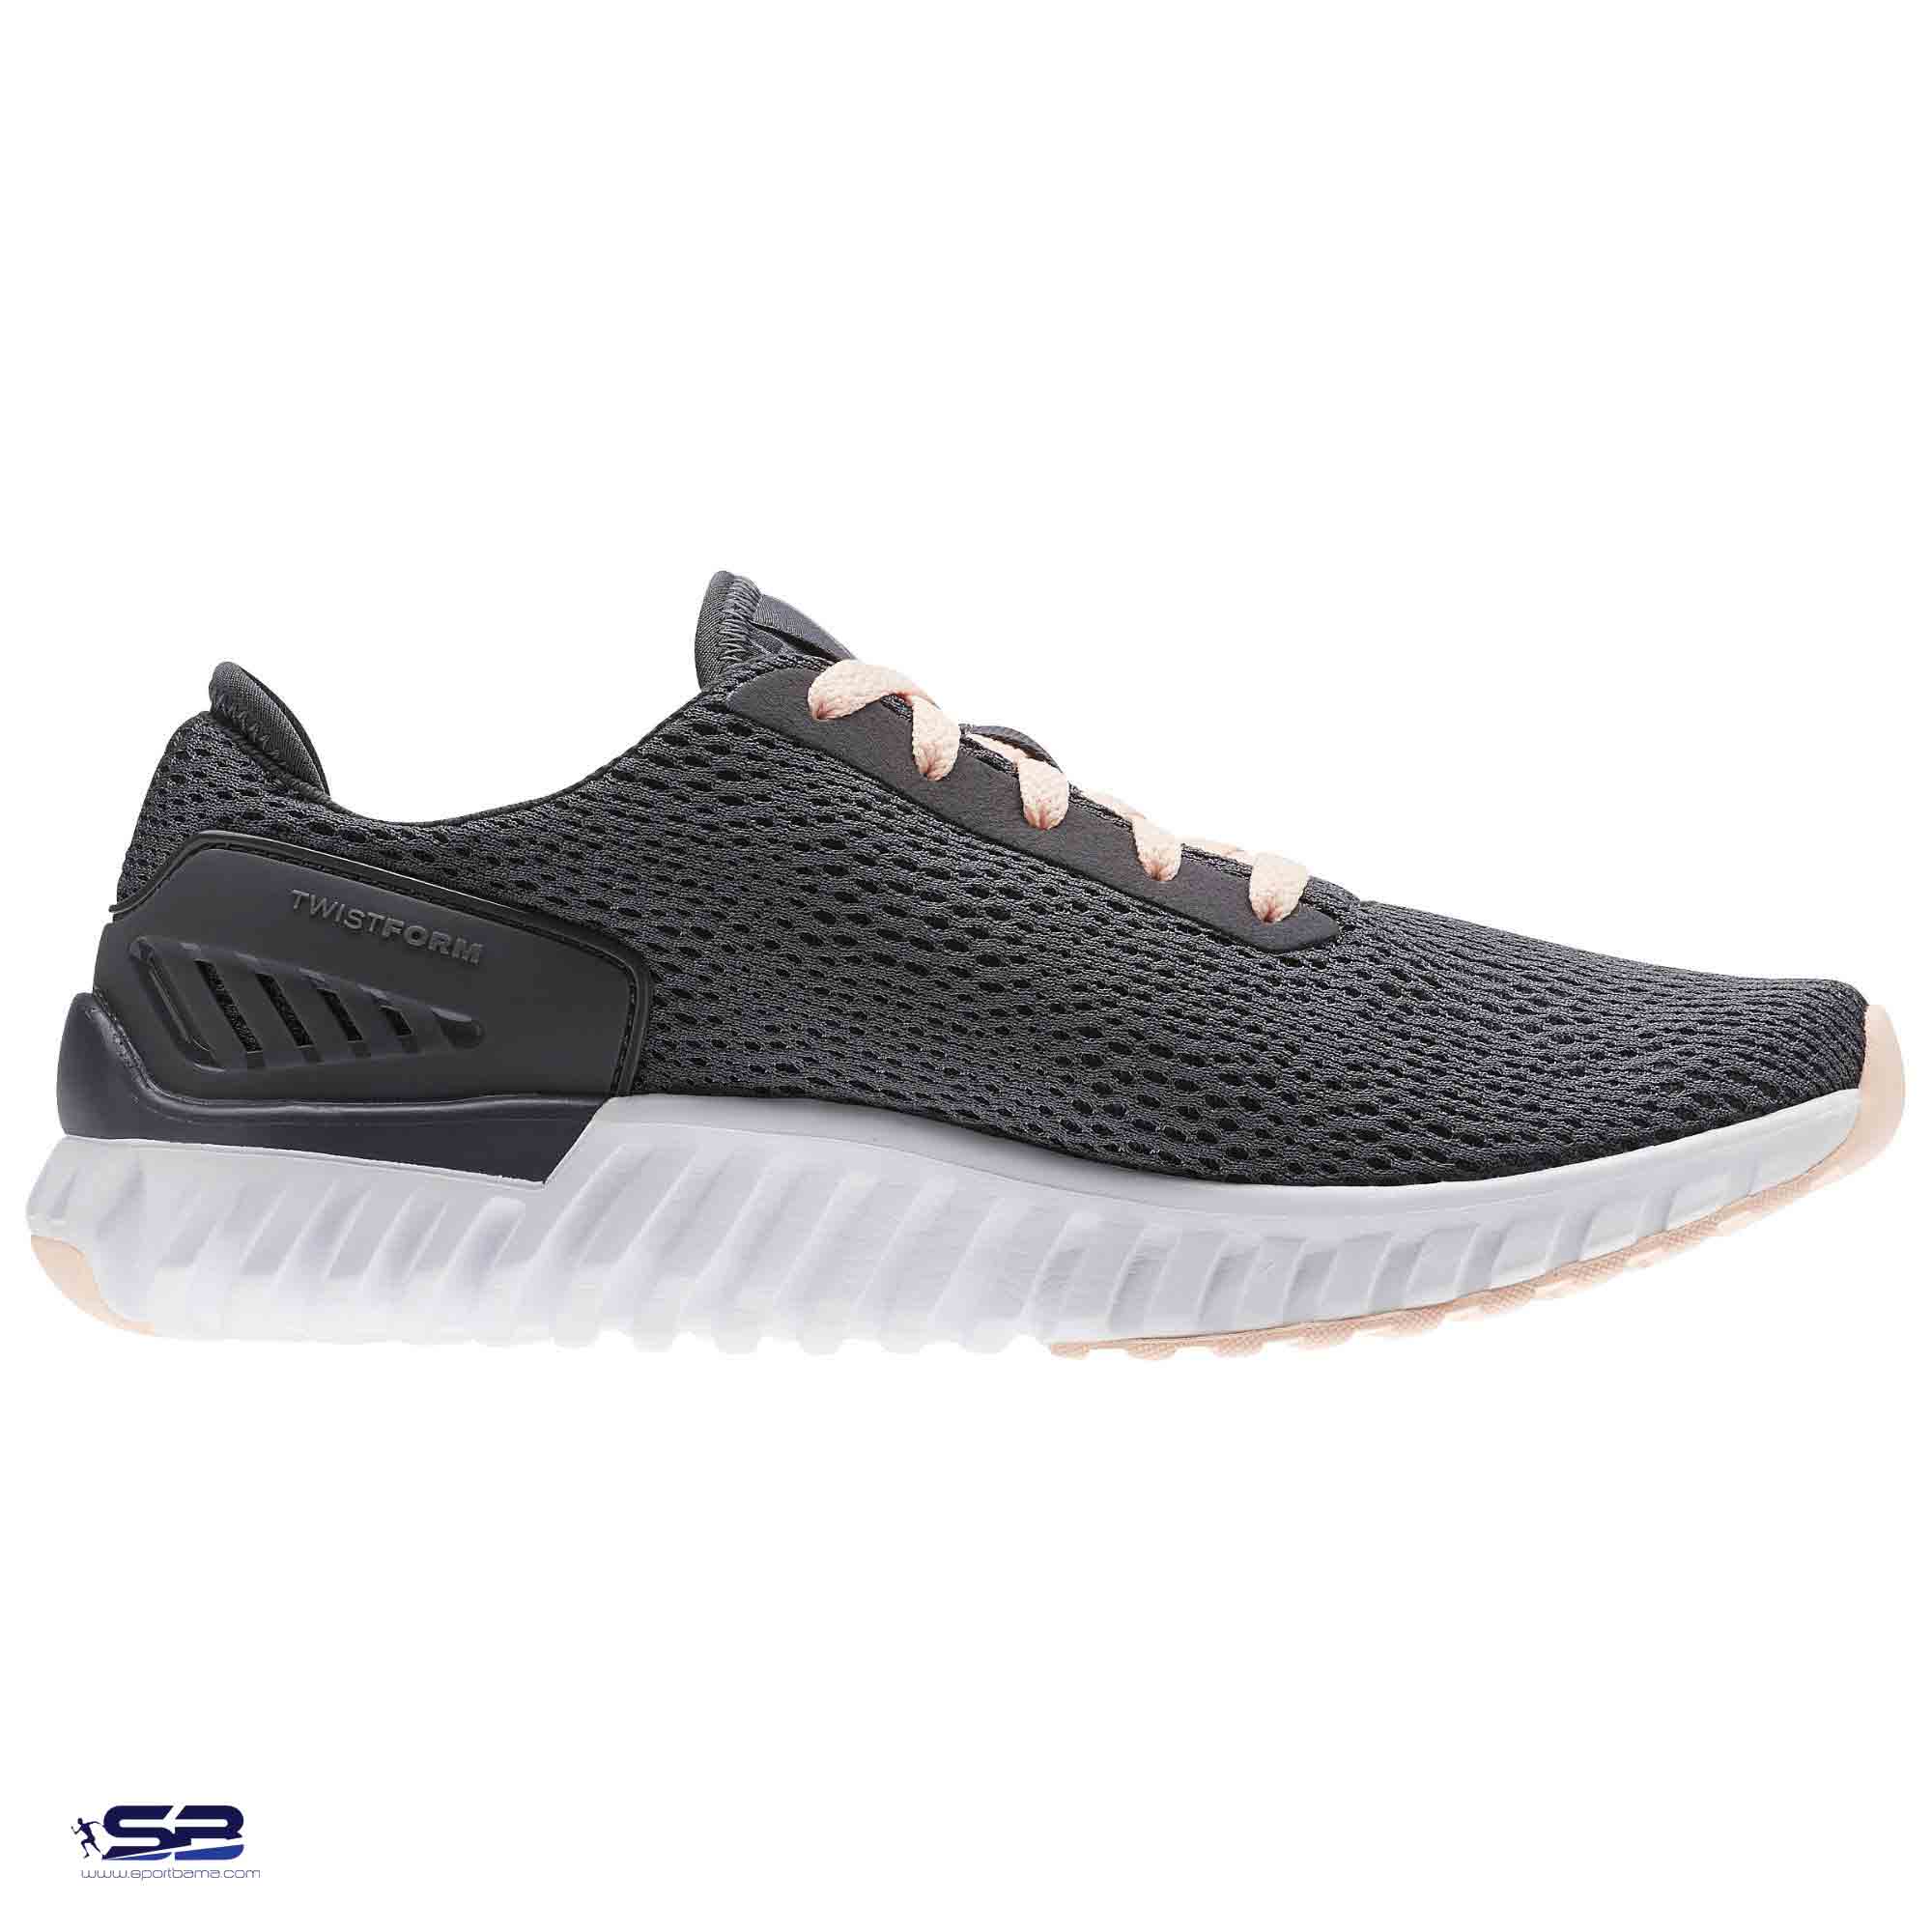  خرید  کفش کتانی اورجینال ریباک     Reebok Running Shoes BS9557  